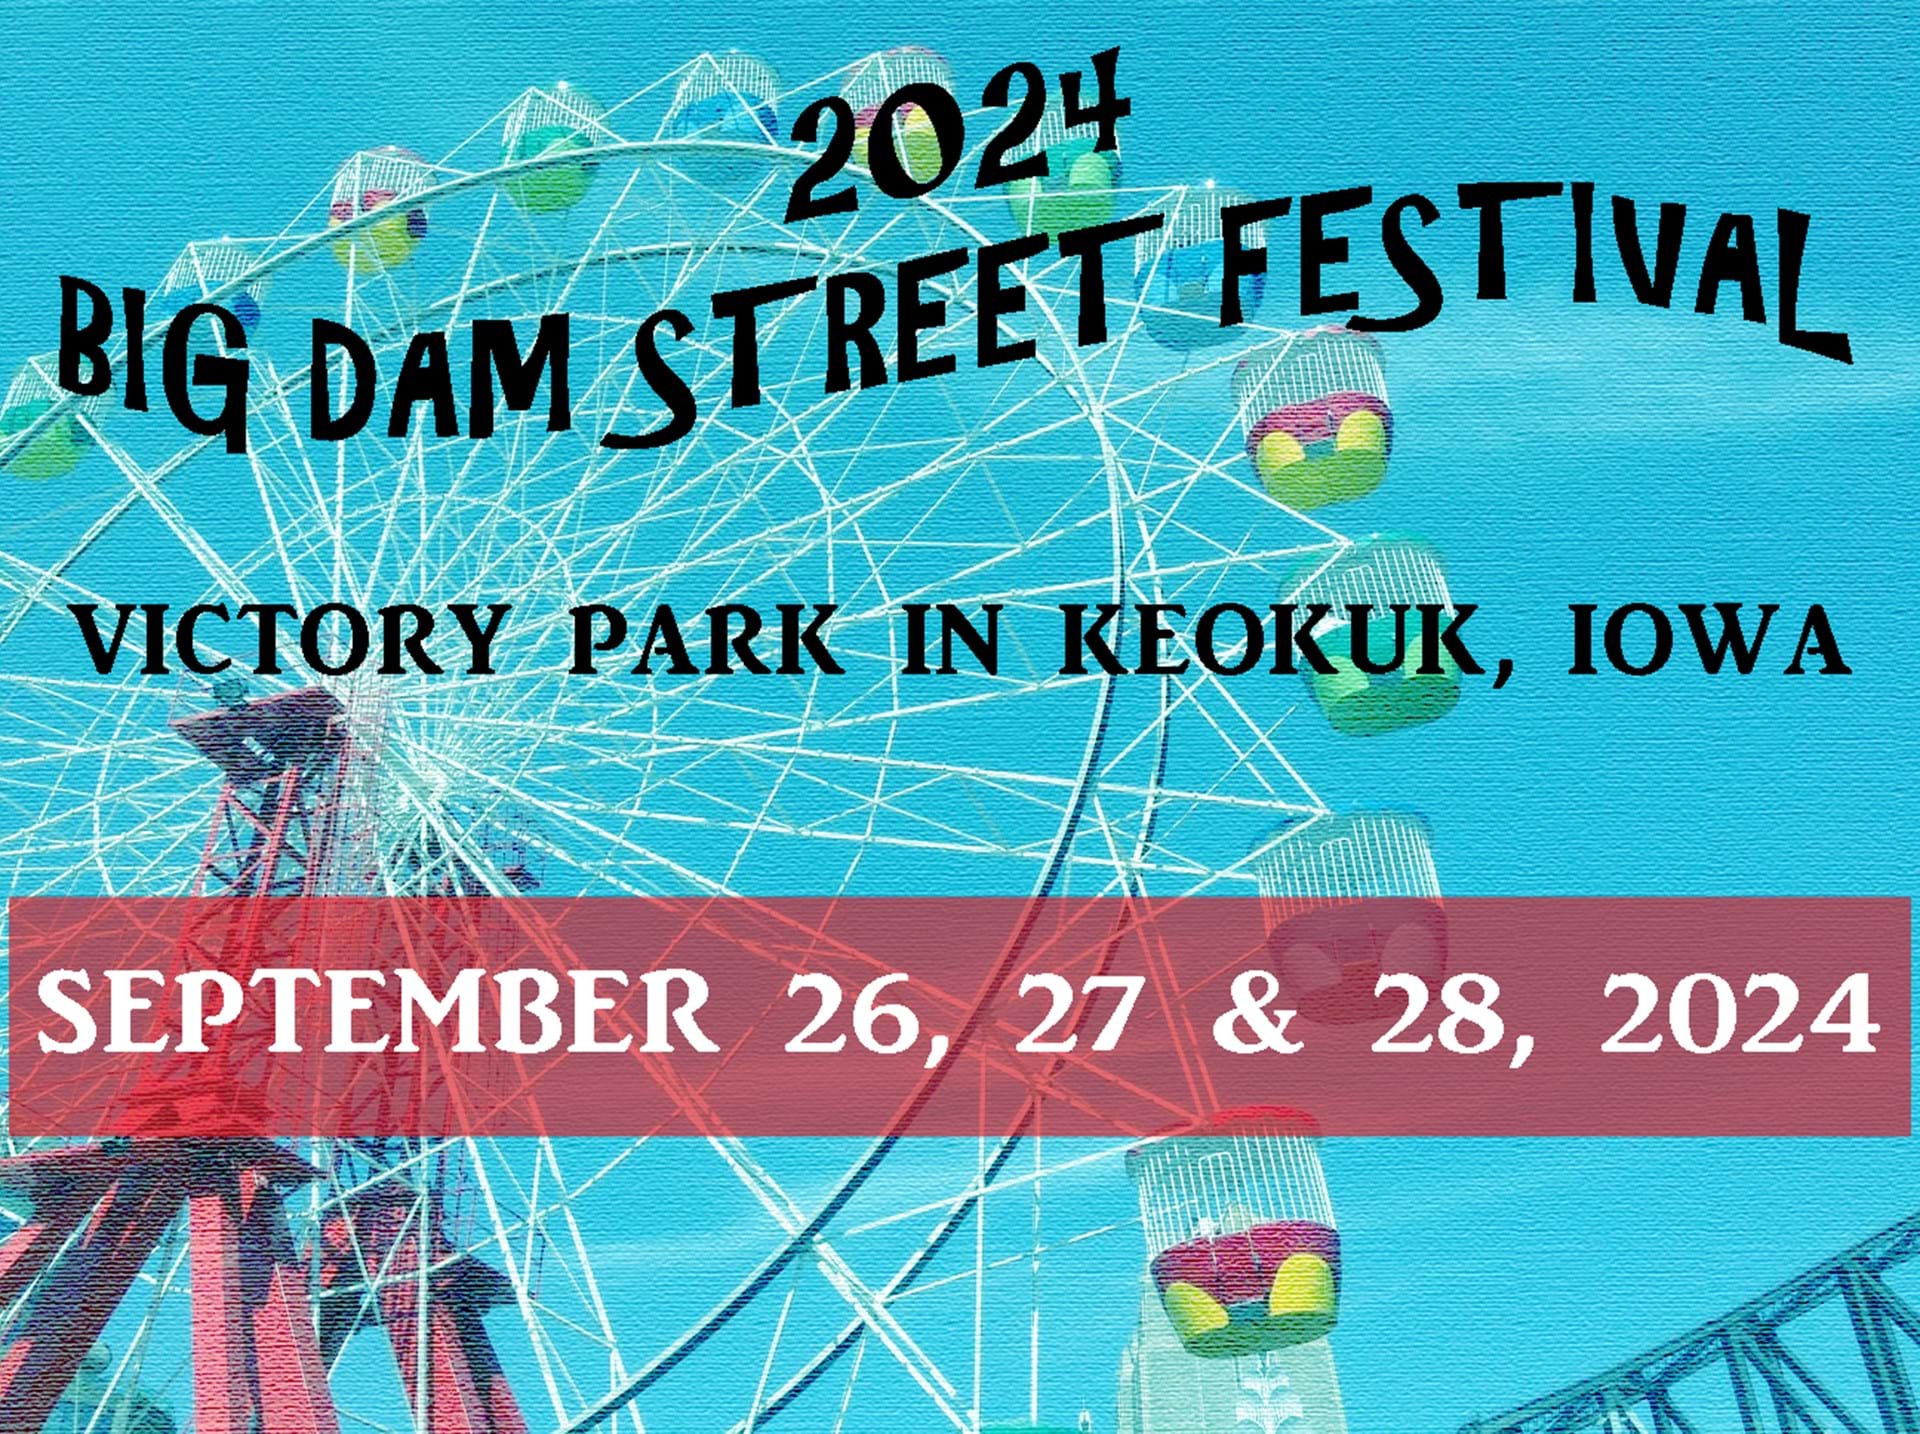 Big Dam Street Festival in Keokuk, Iowa